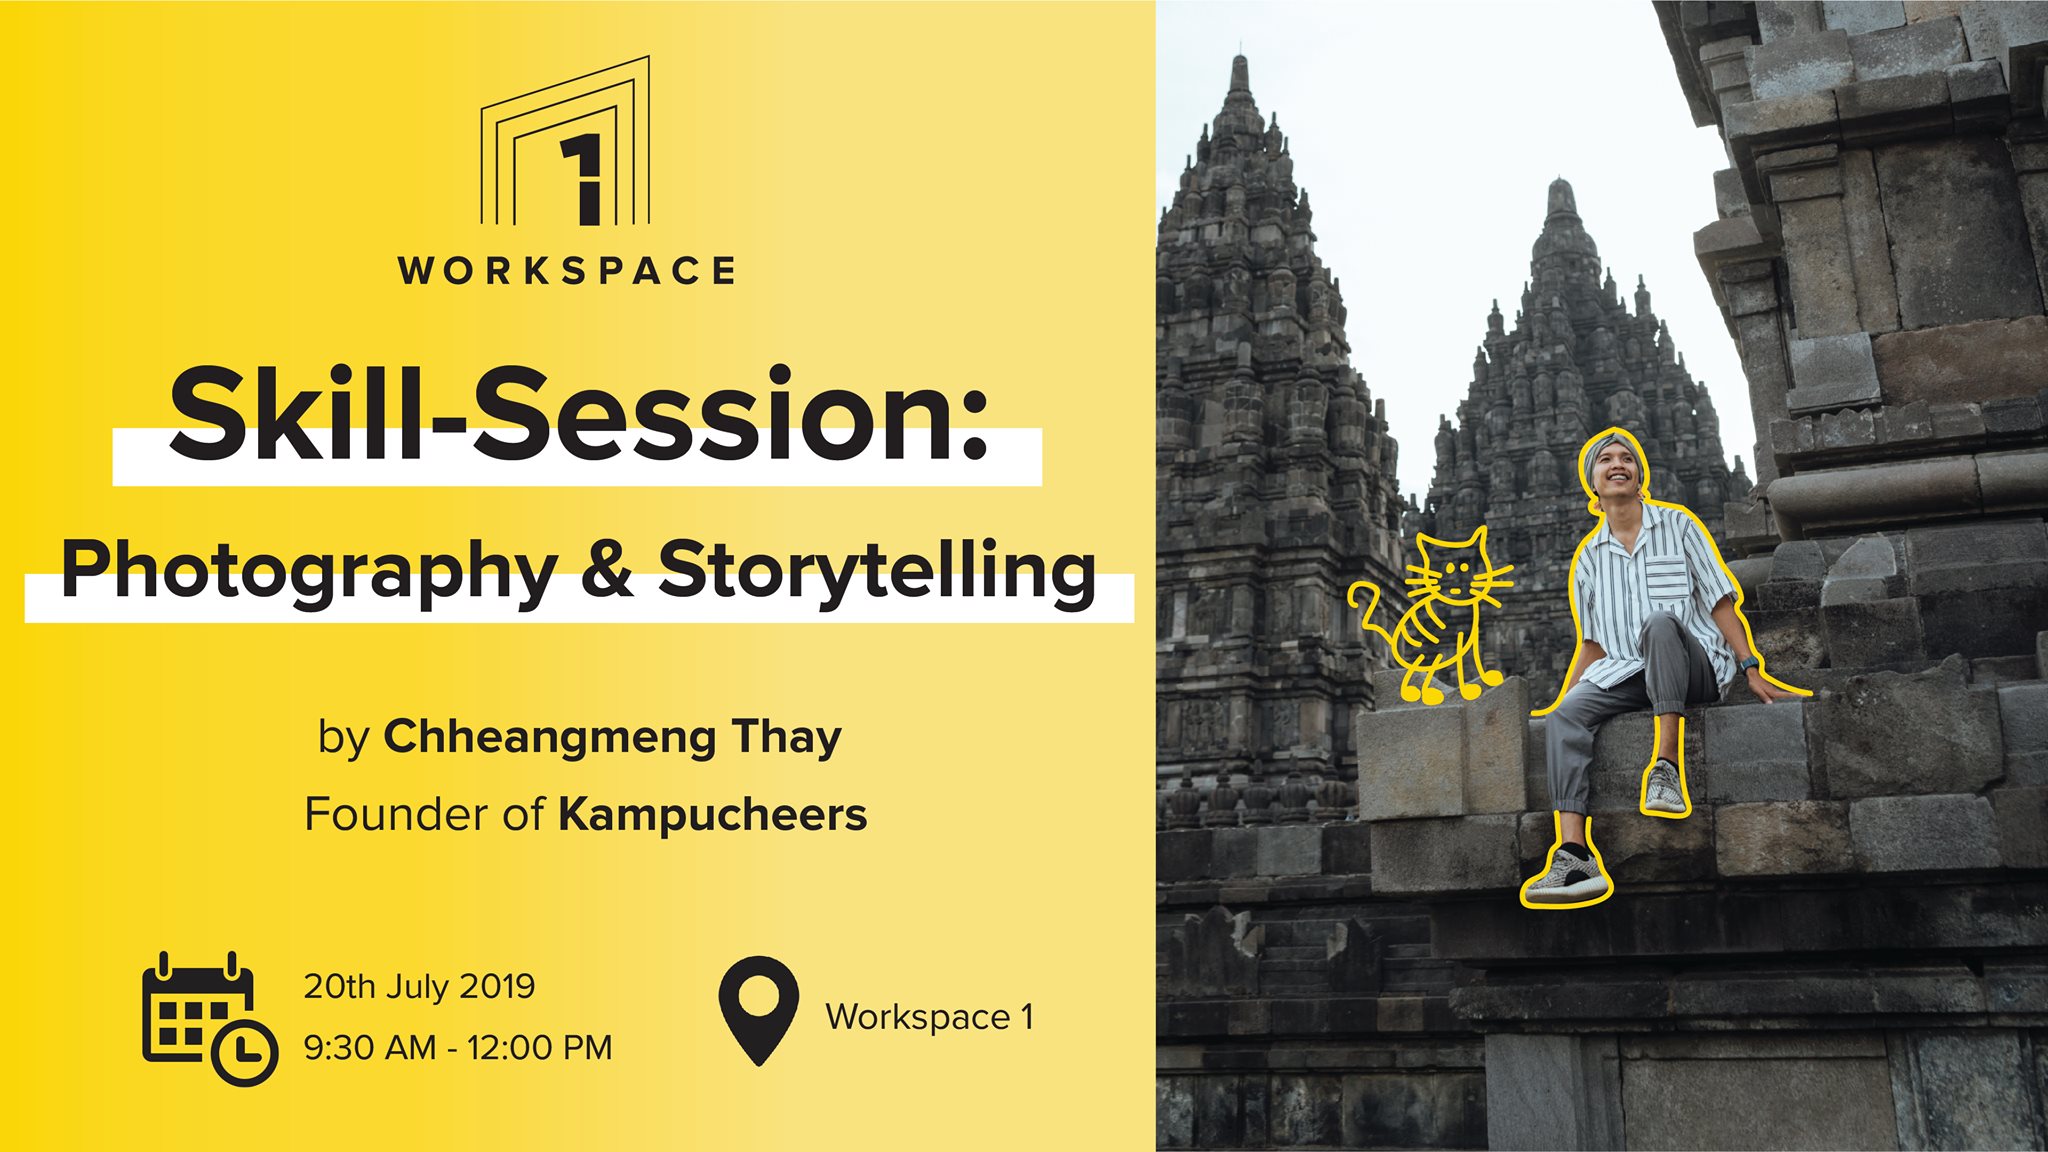 Skill-Session: Photography & Storytelling